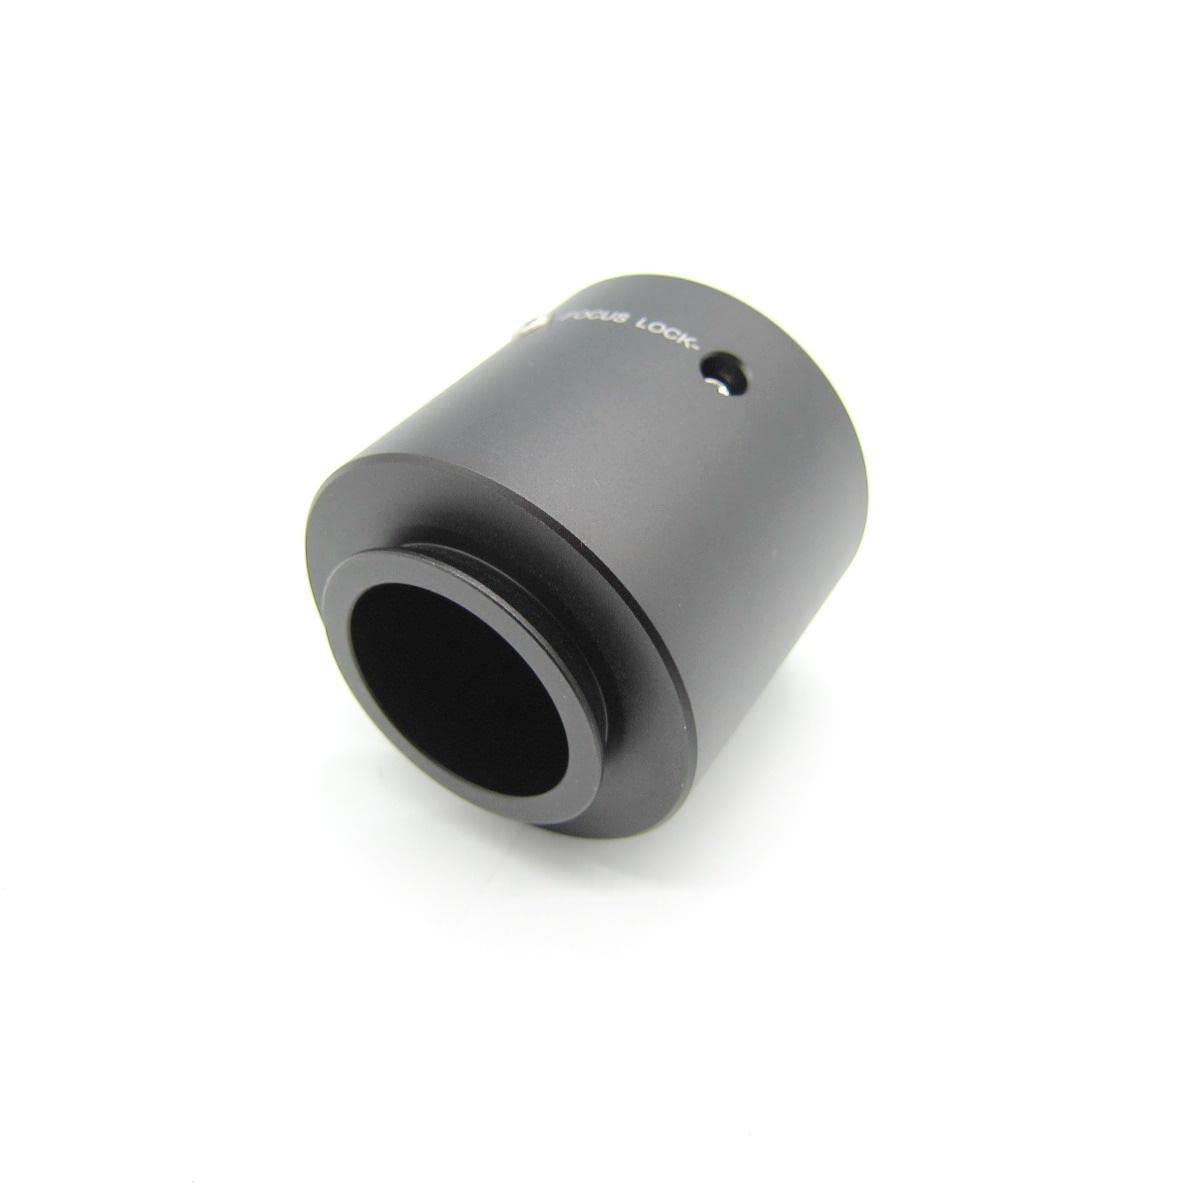 UIOYU Handheld Digital Microscope Accessories Microscope Tube Camera Connecting 0.63X C-Mount Adapter Microscope Accessories